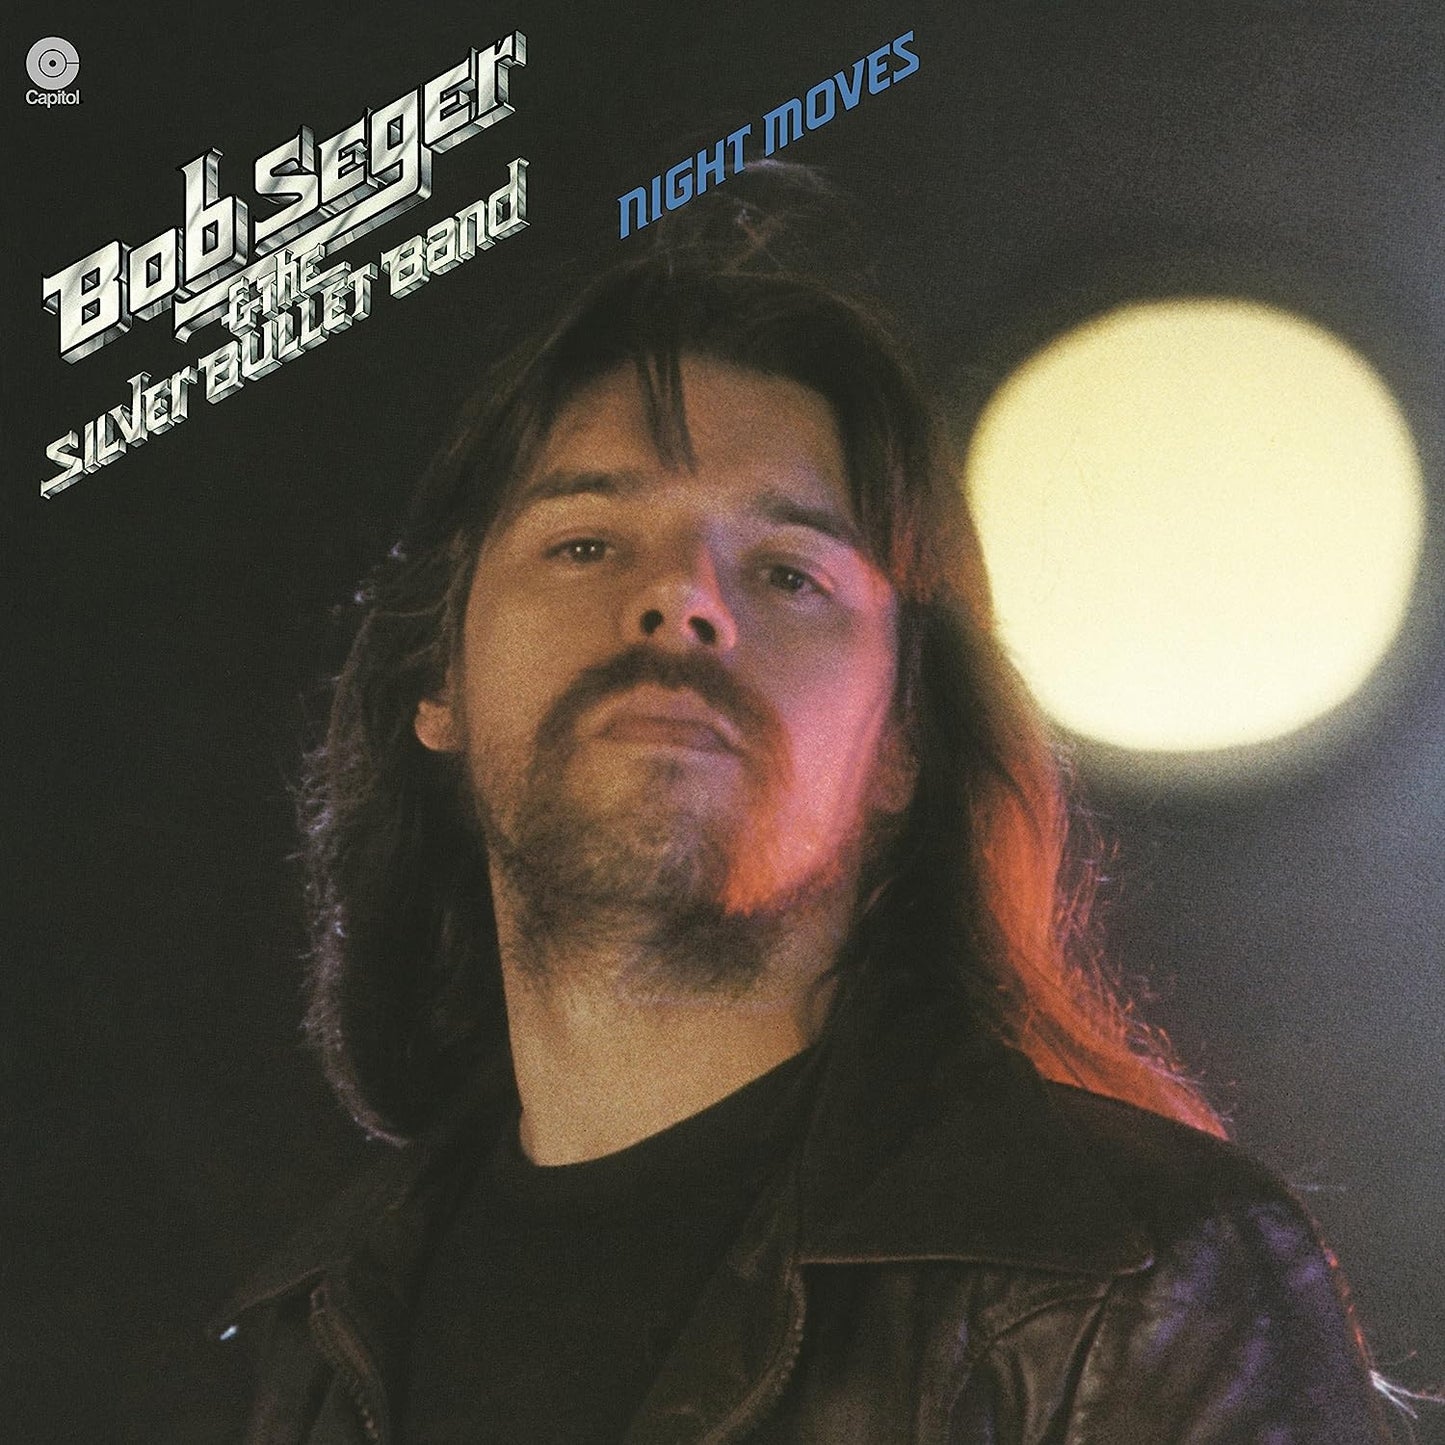 BOB SEGER &amp; THE SILVER BULLET BAND - NIGHT MOVES - LP DE VINILO